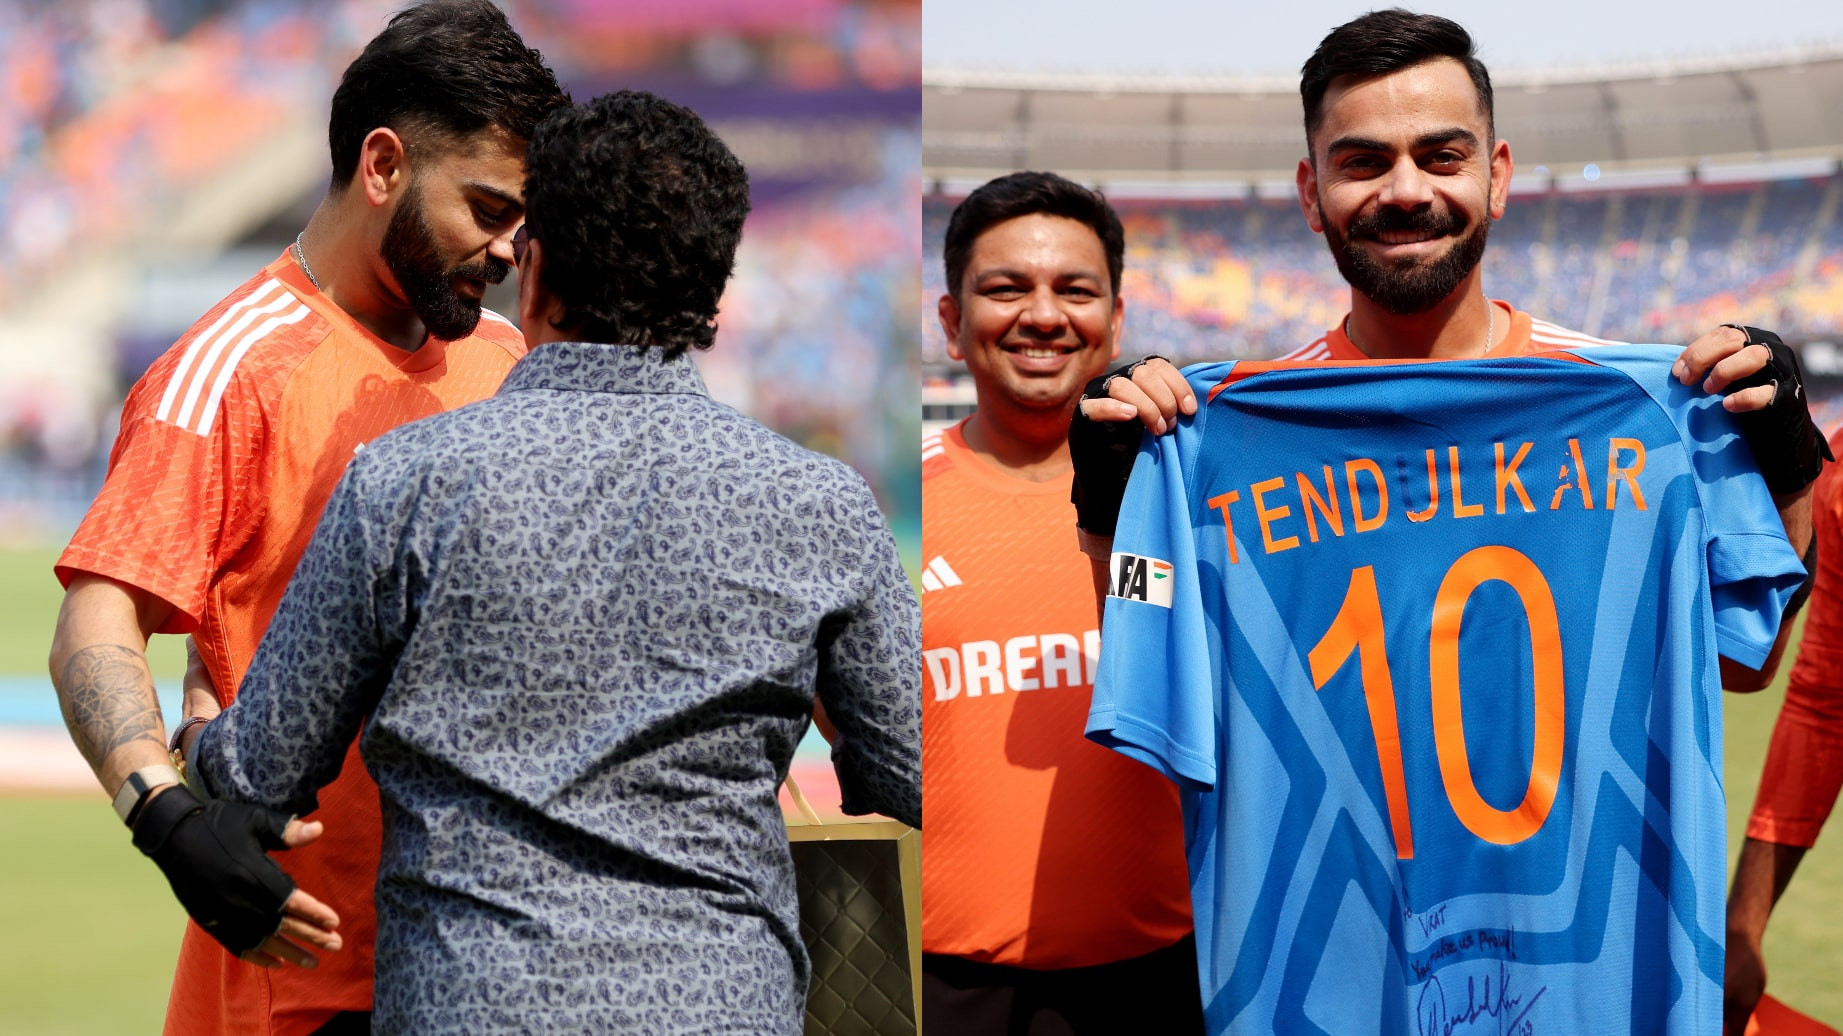 CWC 2023: “Make us proud” – Sachin Tendulkar gifts signed jersey to Virat Kohli ahead of World Cup final